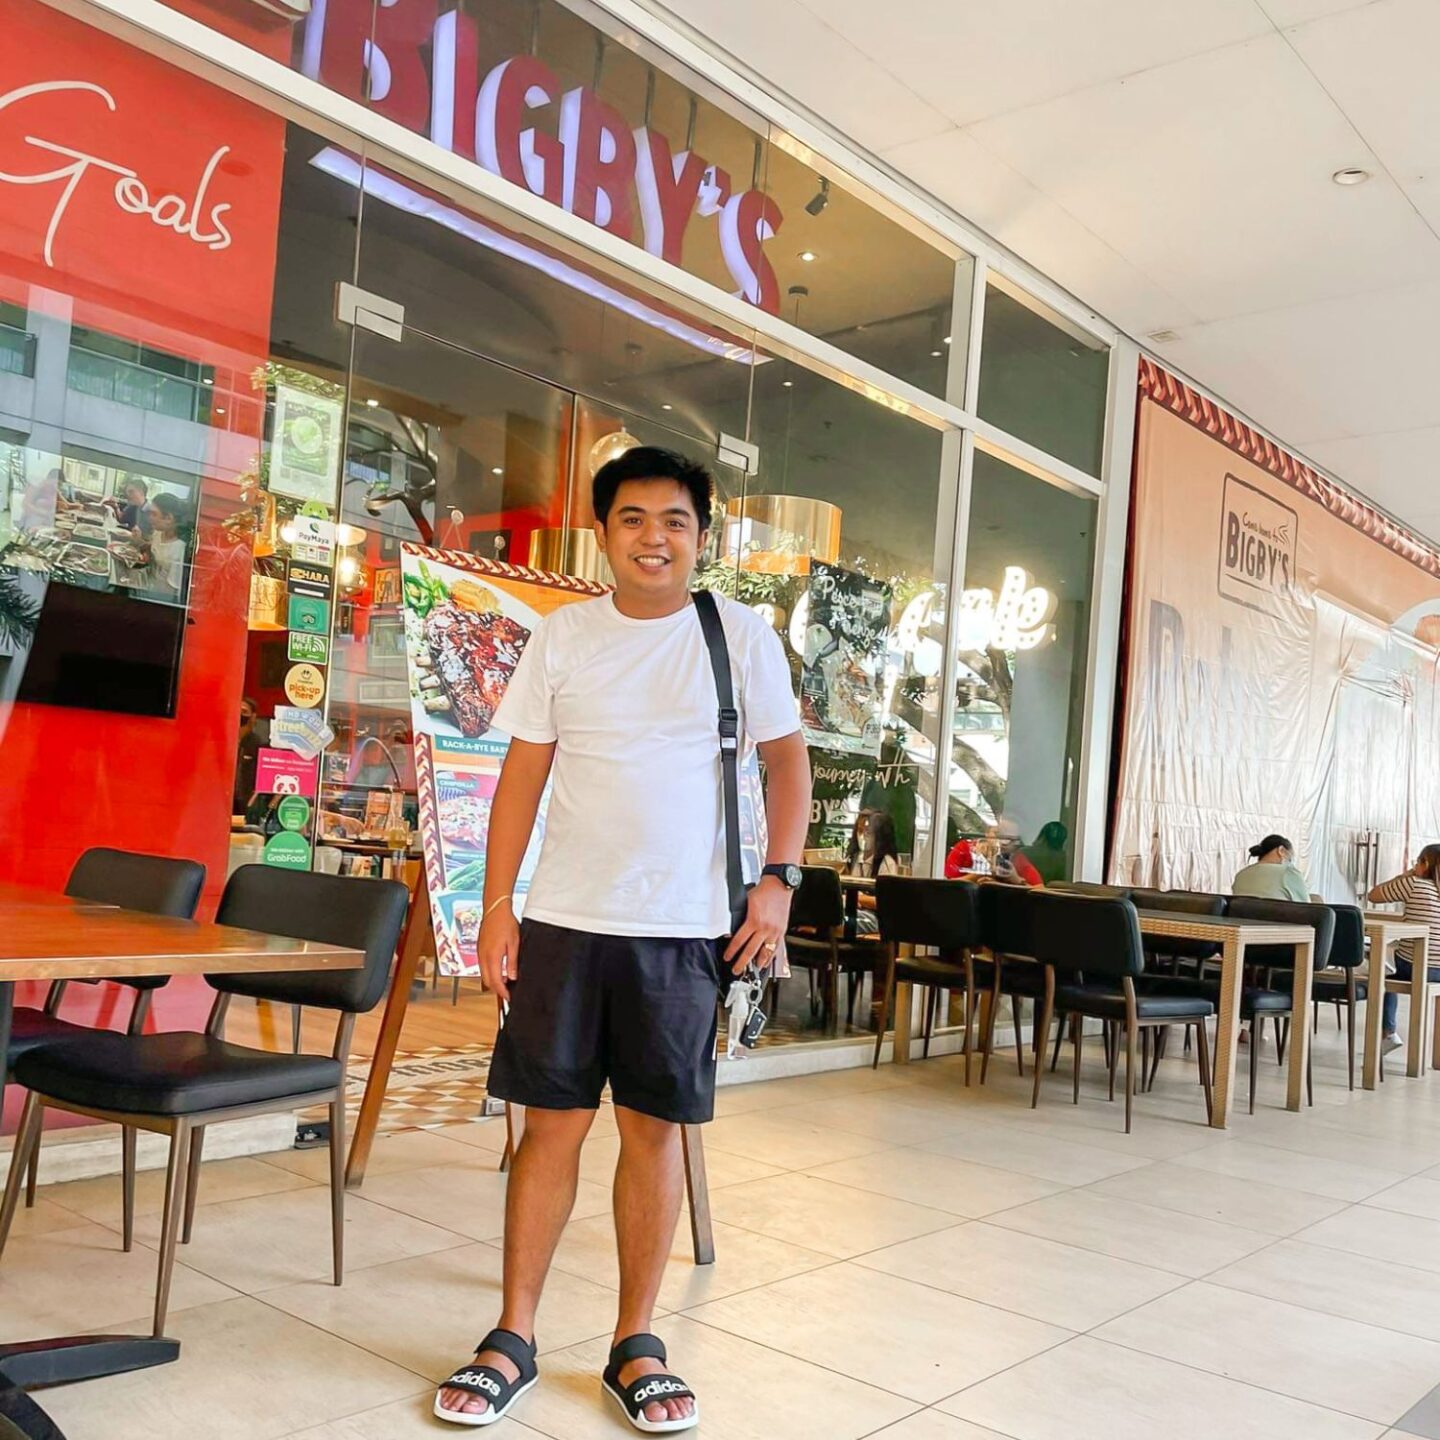 Top 10 Restaurants Must-Visit in Cagayan De Oro City